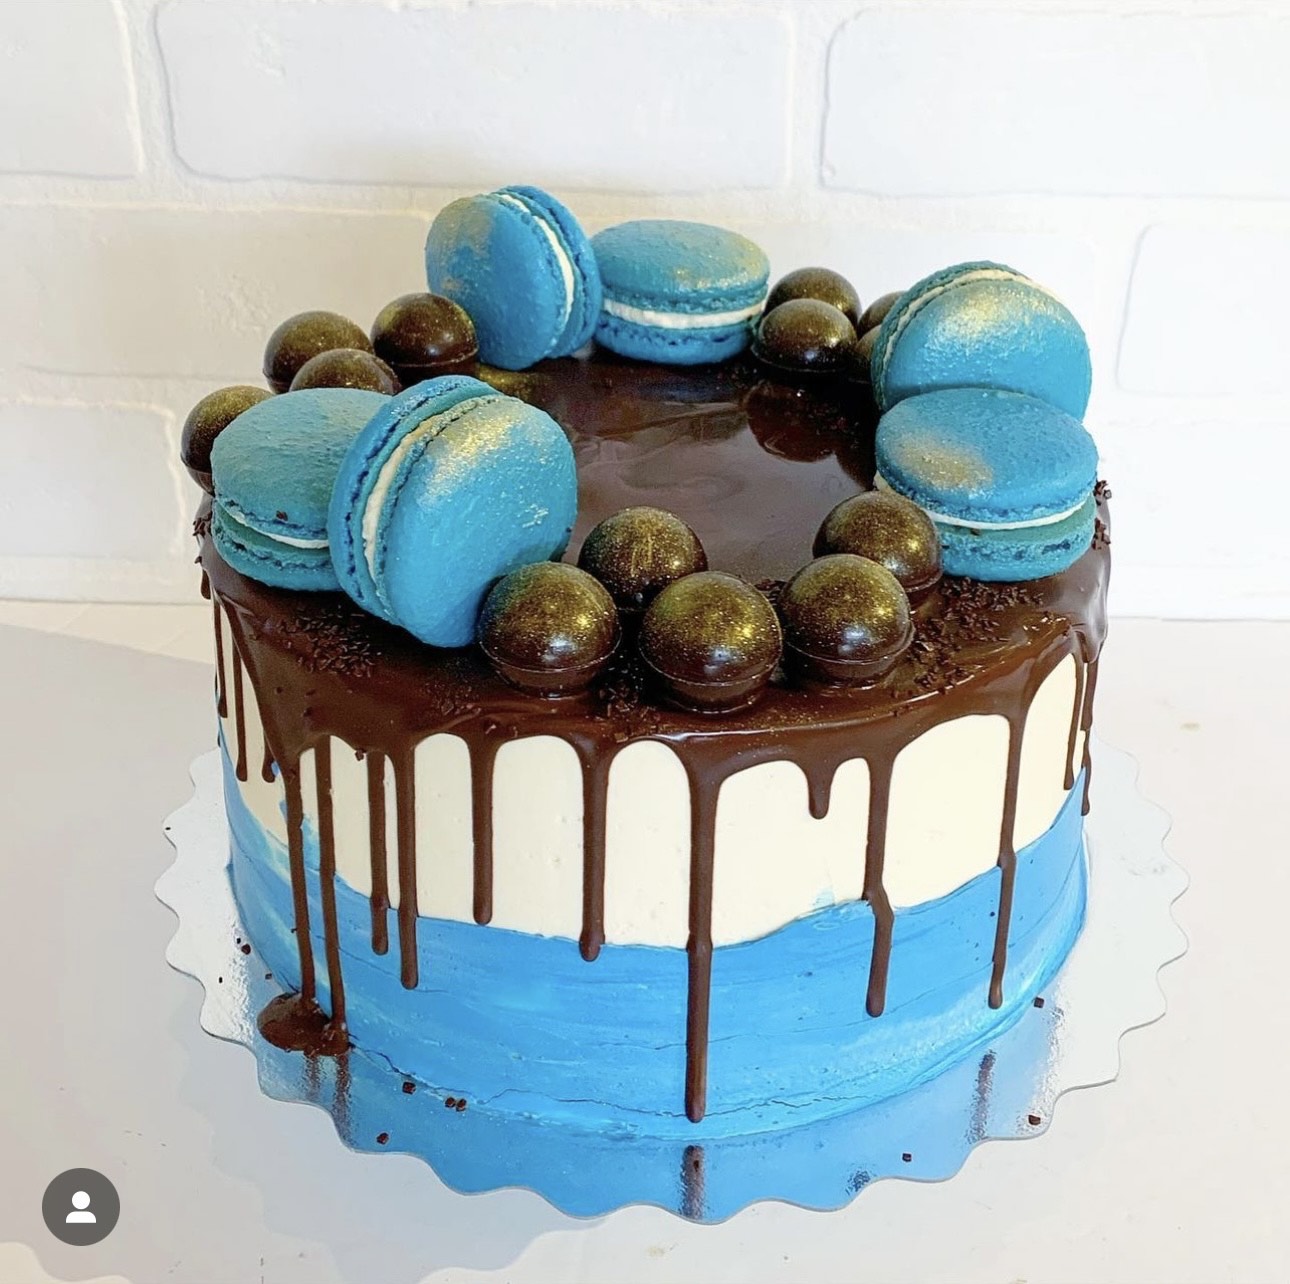 Cake with macarons